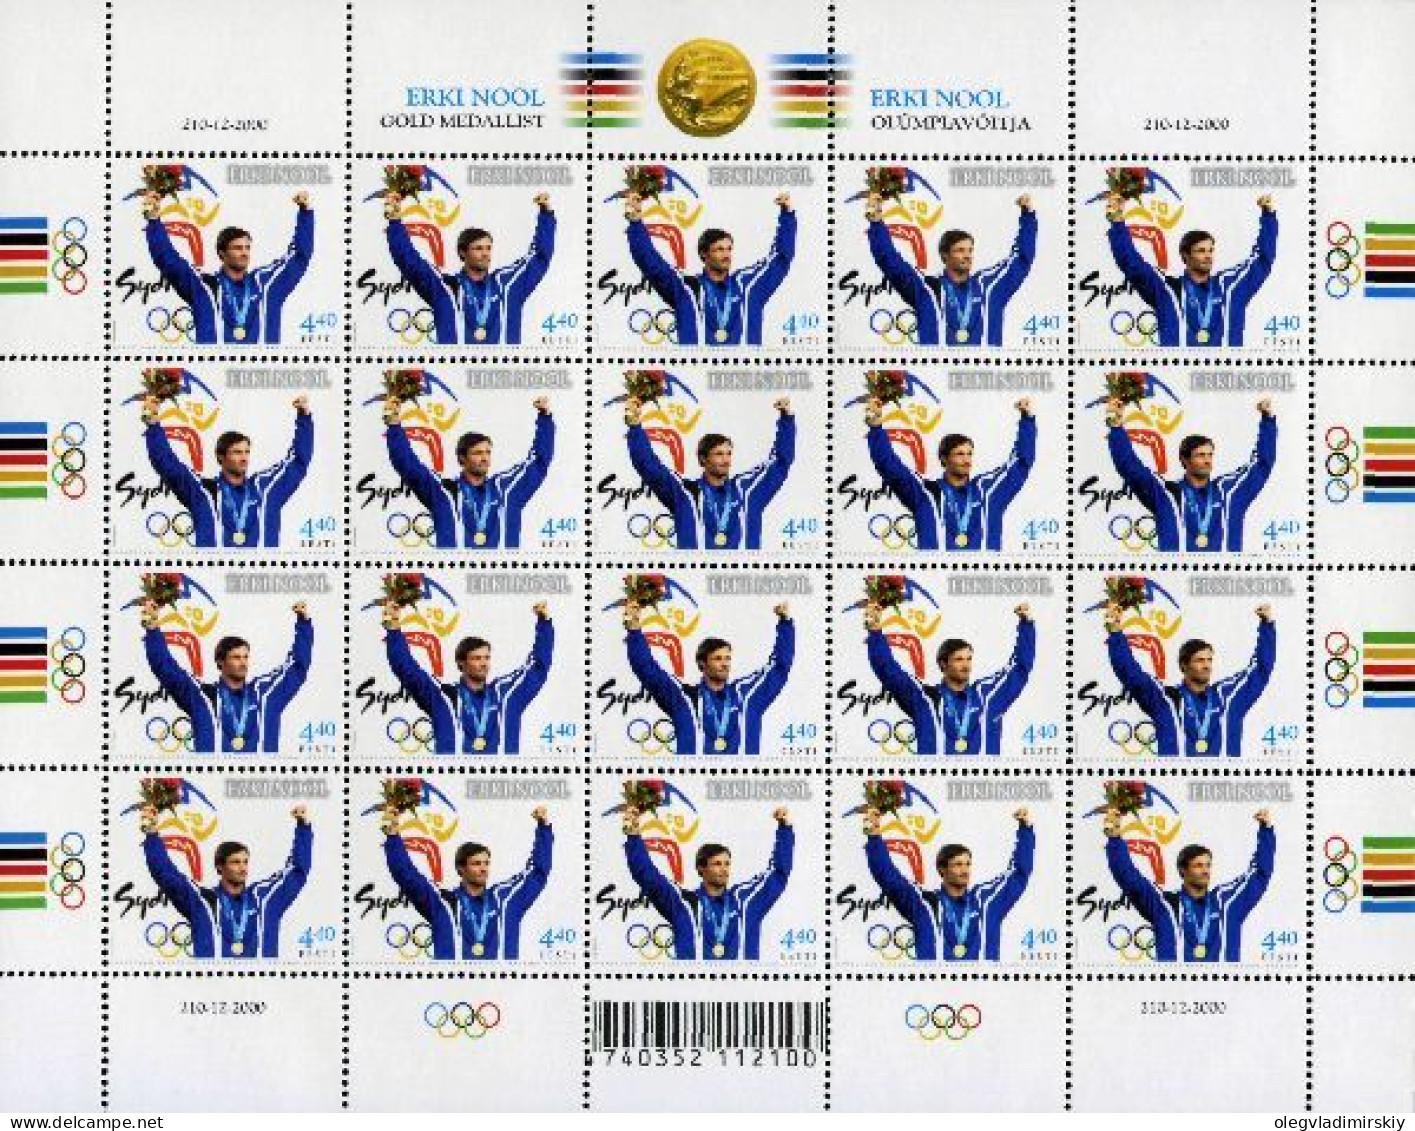 Estonia Estland Estonie 2001 Olympic Champion Erki Nool Sydney Summer Olympics Sheetlet MNH - Summer 2000: Sydney - Paralympic